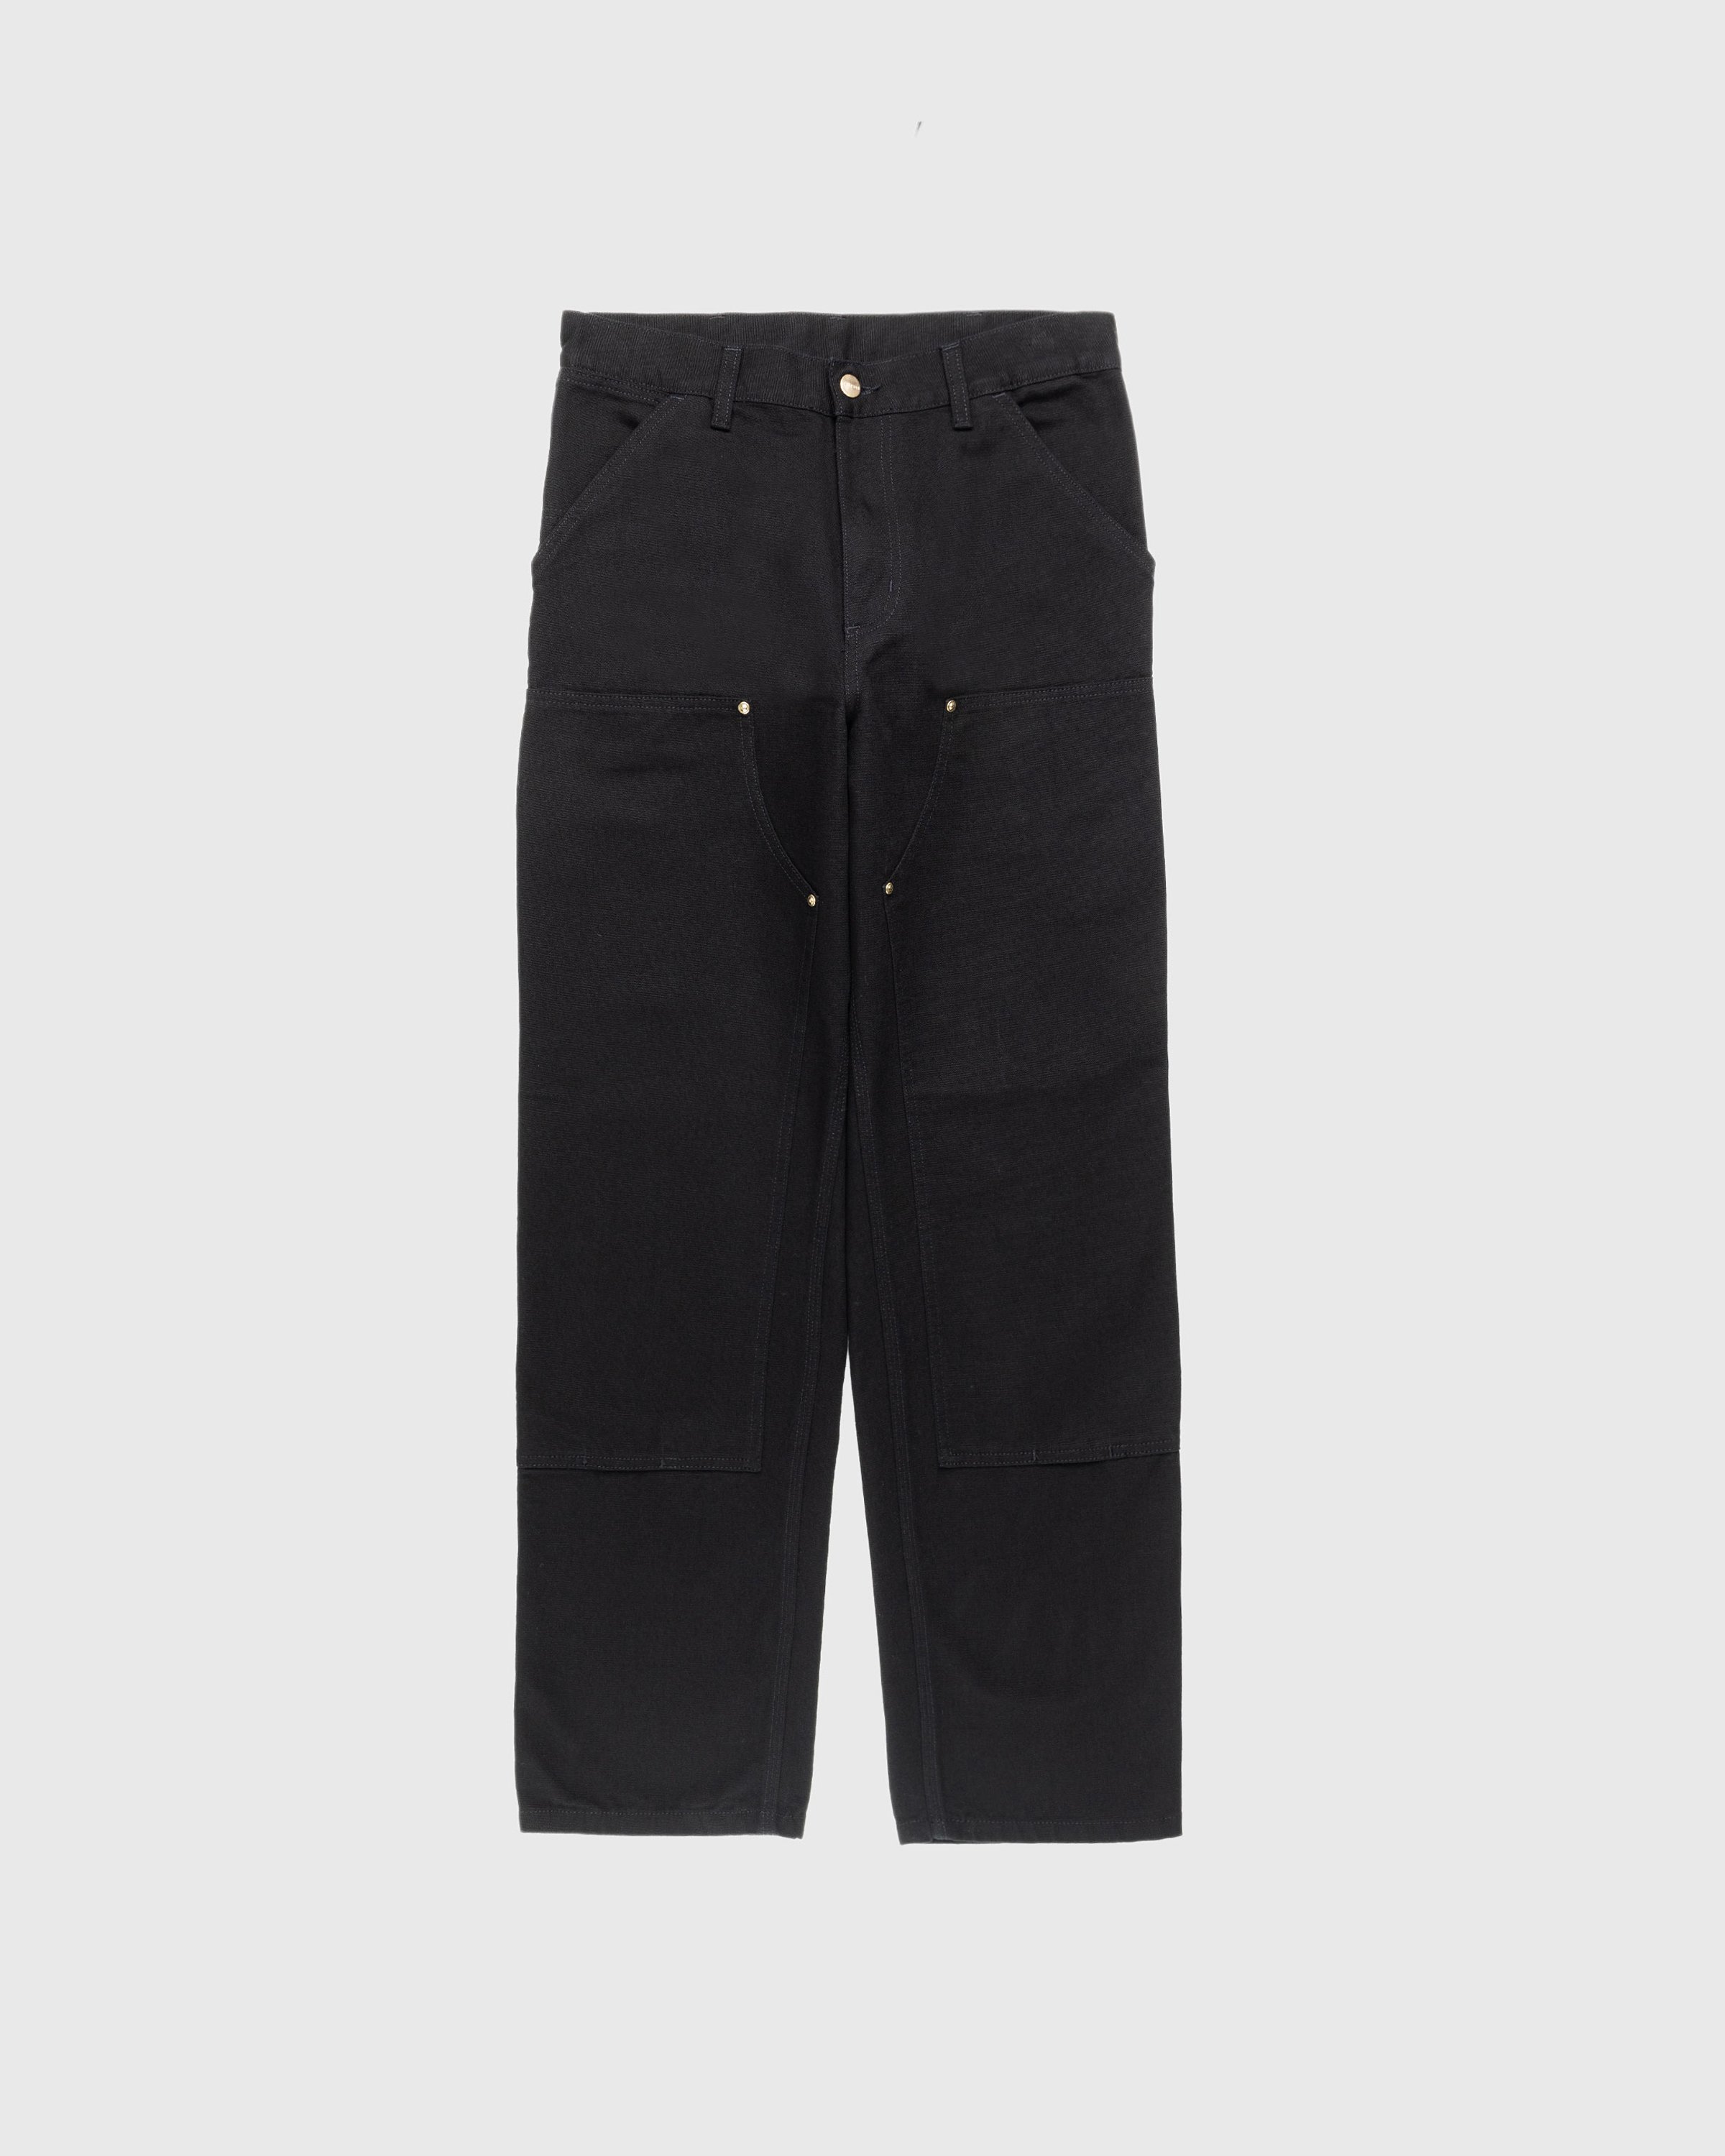 Carhartt WIP - Double Knee Pant Black - Clothing - Black - Image 1